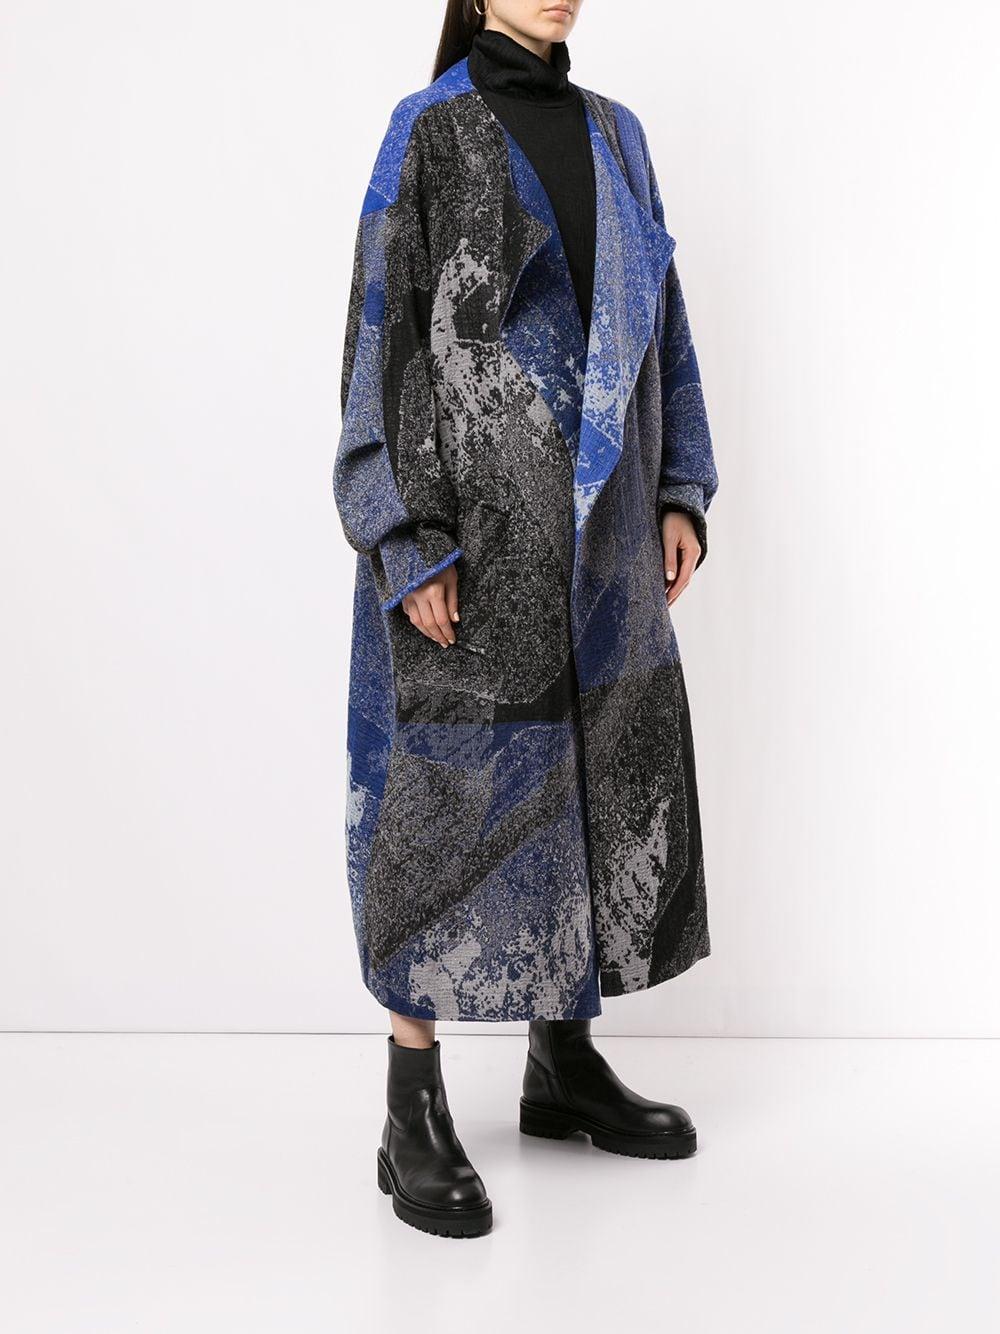 Y's Yohji Yamamoto Wool Oversized Abstract Knit Coat in Blue - Lyst